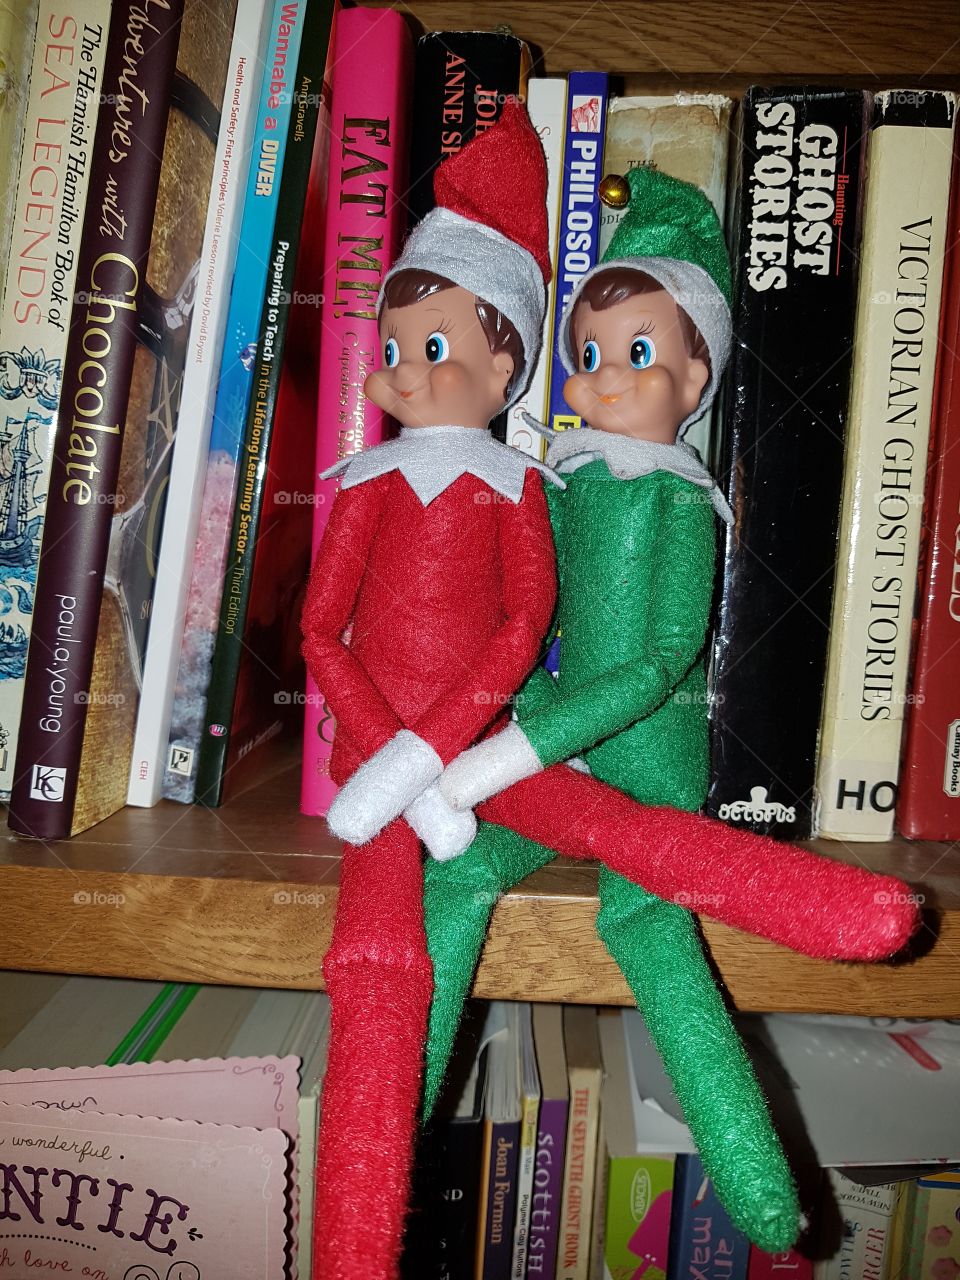 2 naughty elves on their shelf